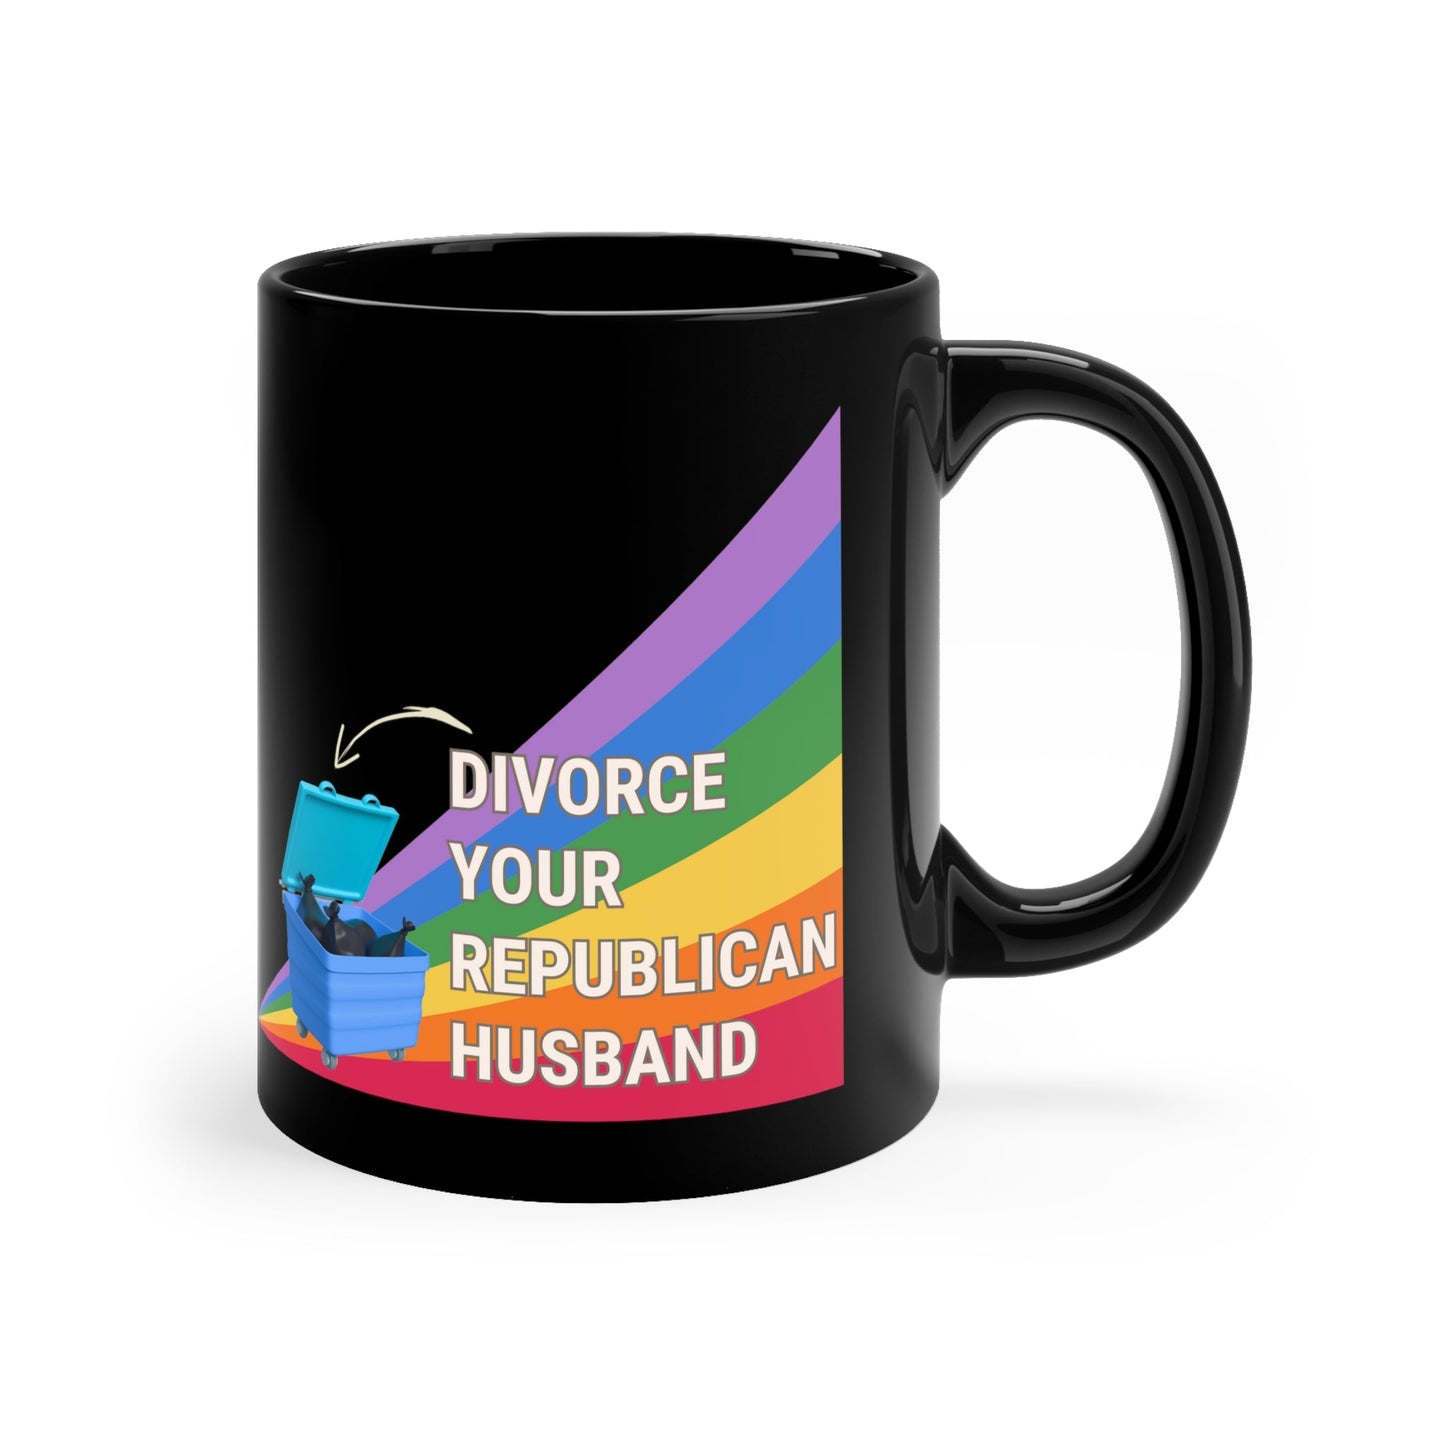 Divorce Your Republican Husband Mug in Black